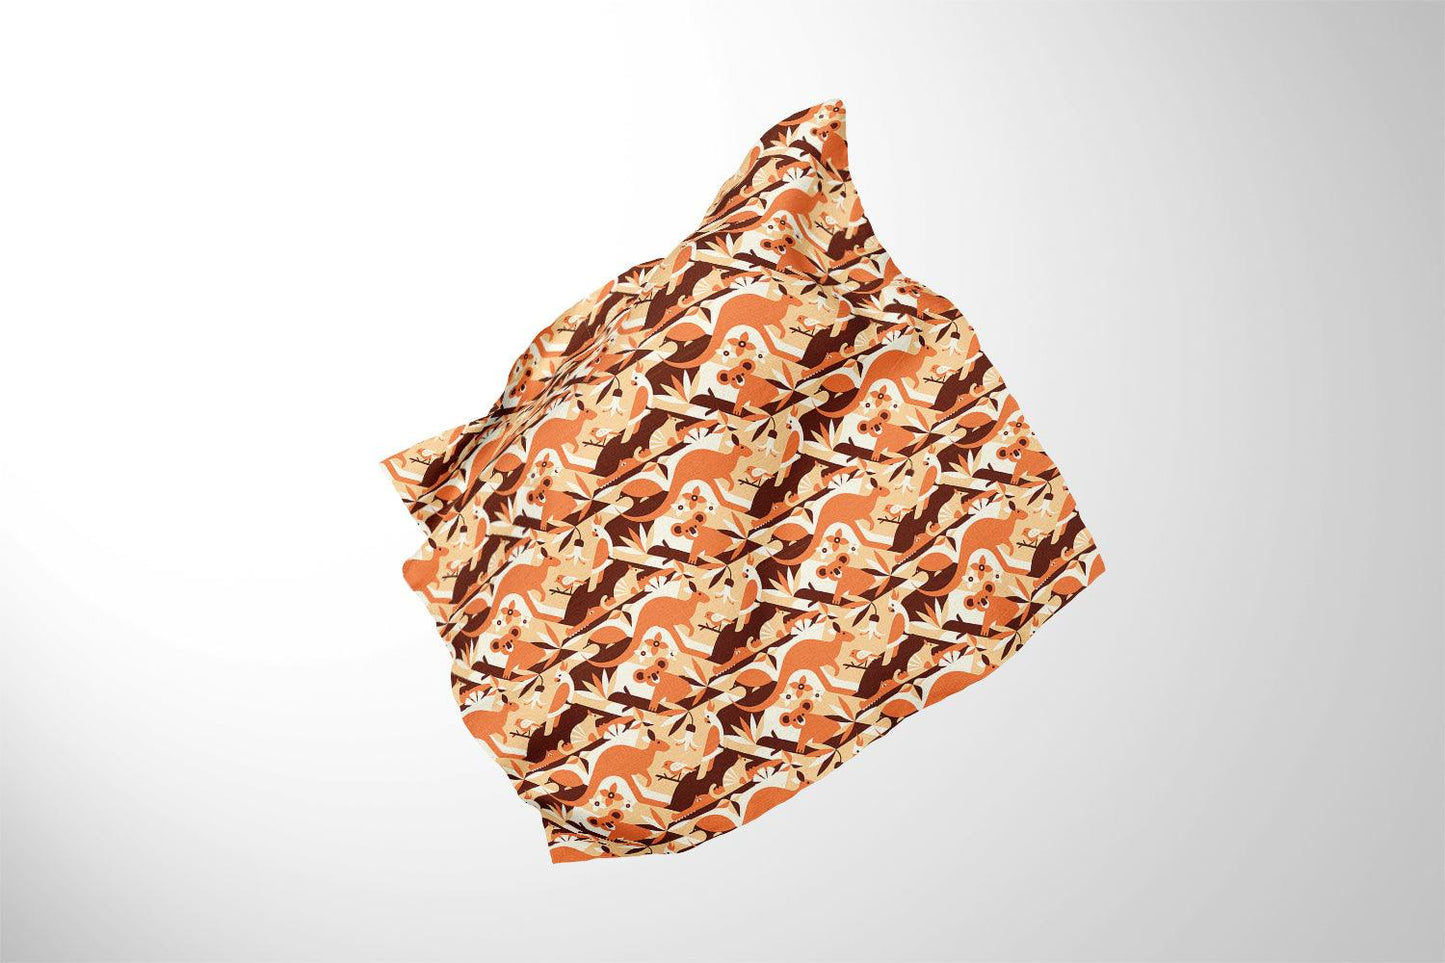 Design 85 - Australian Animals Fabric - Fabric by Missy Rose Pre-Order